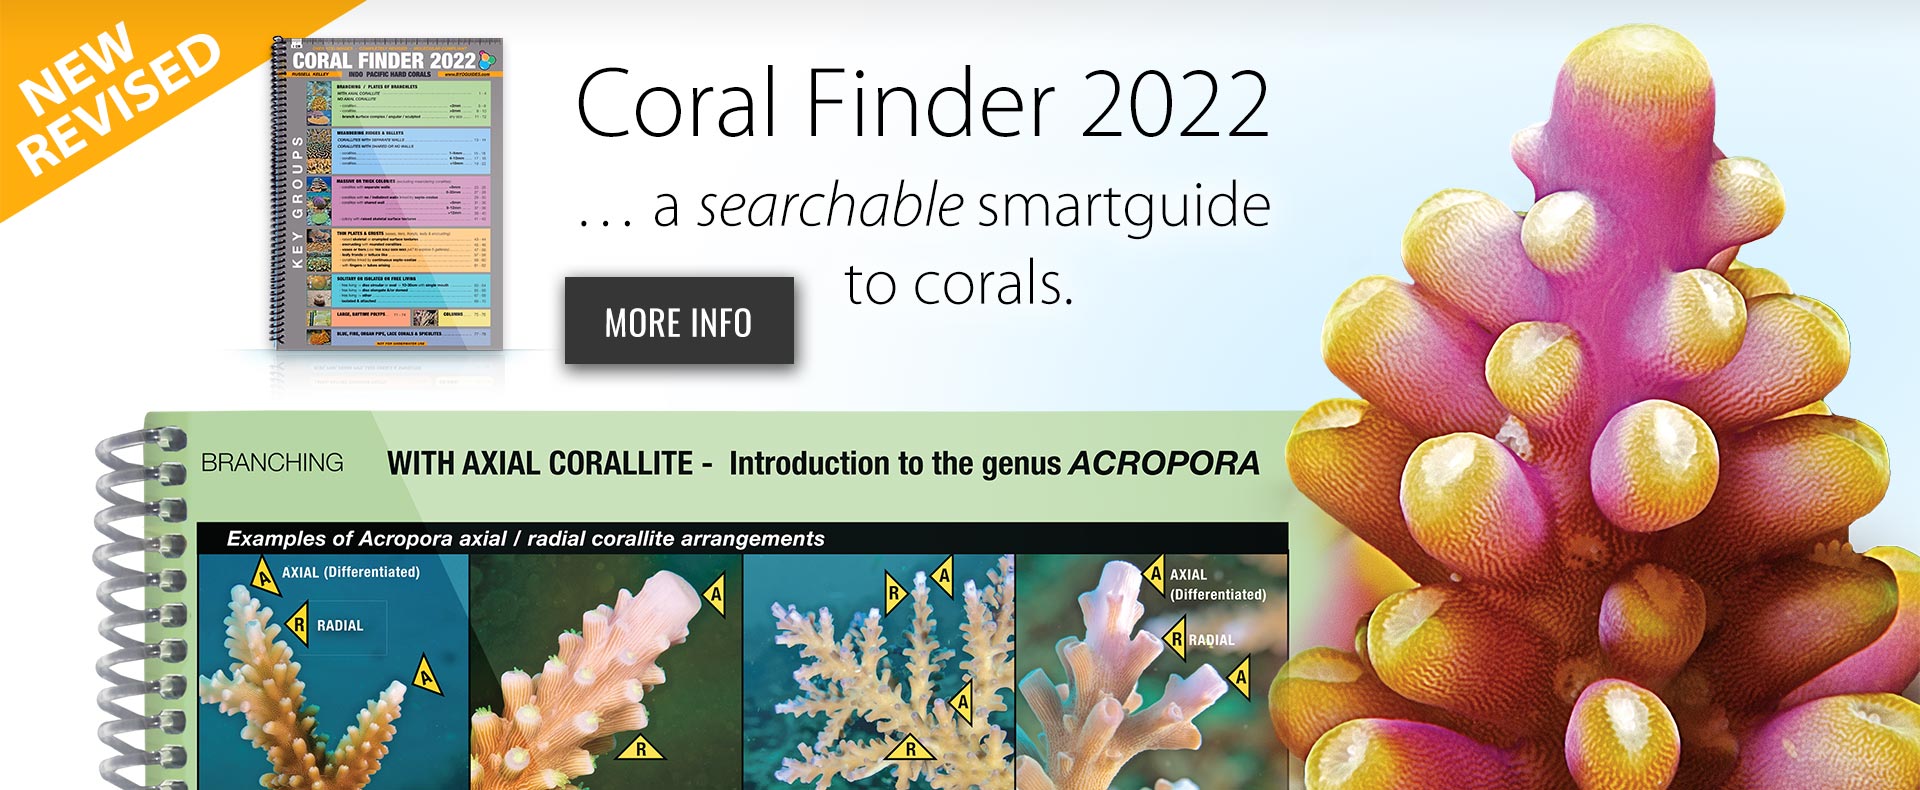 Coral Finder 2022 - a searchable smartguide to corals